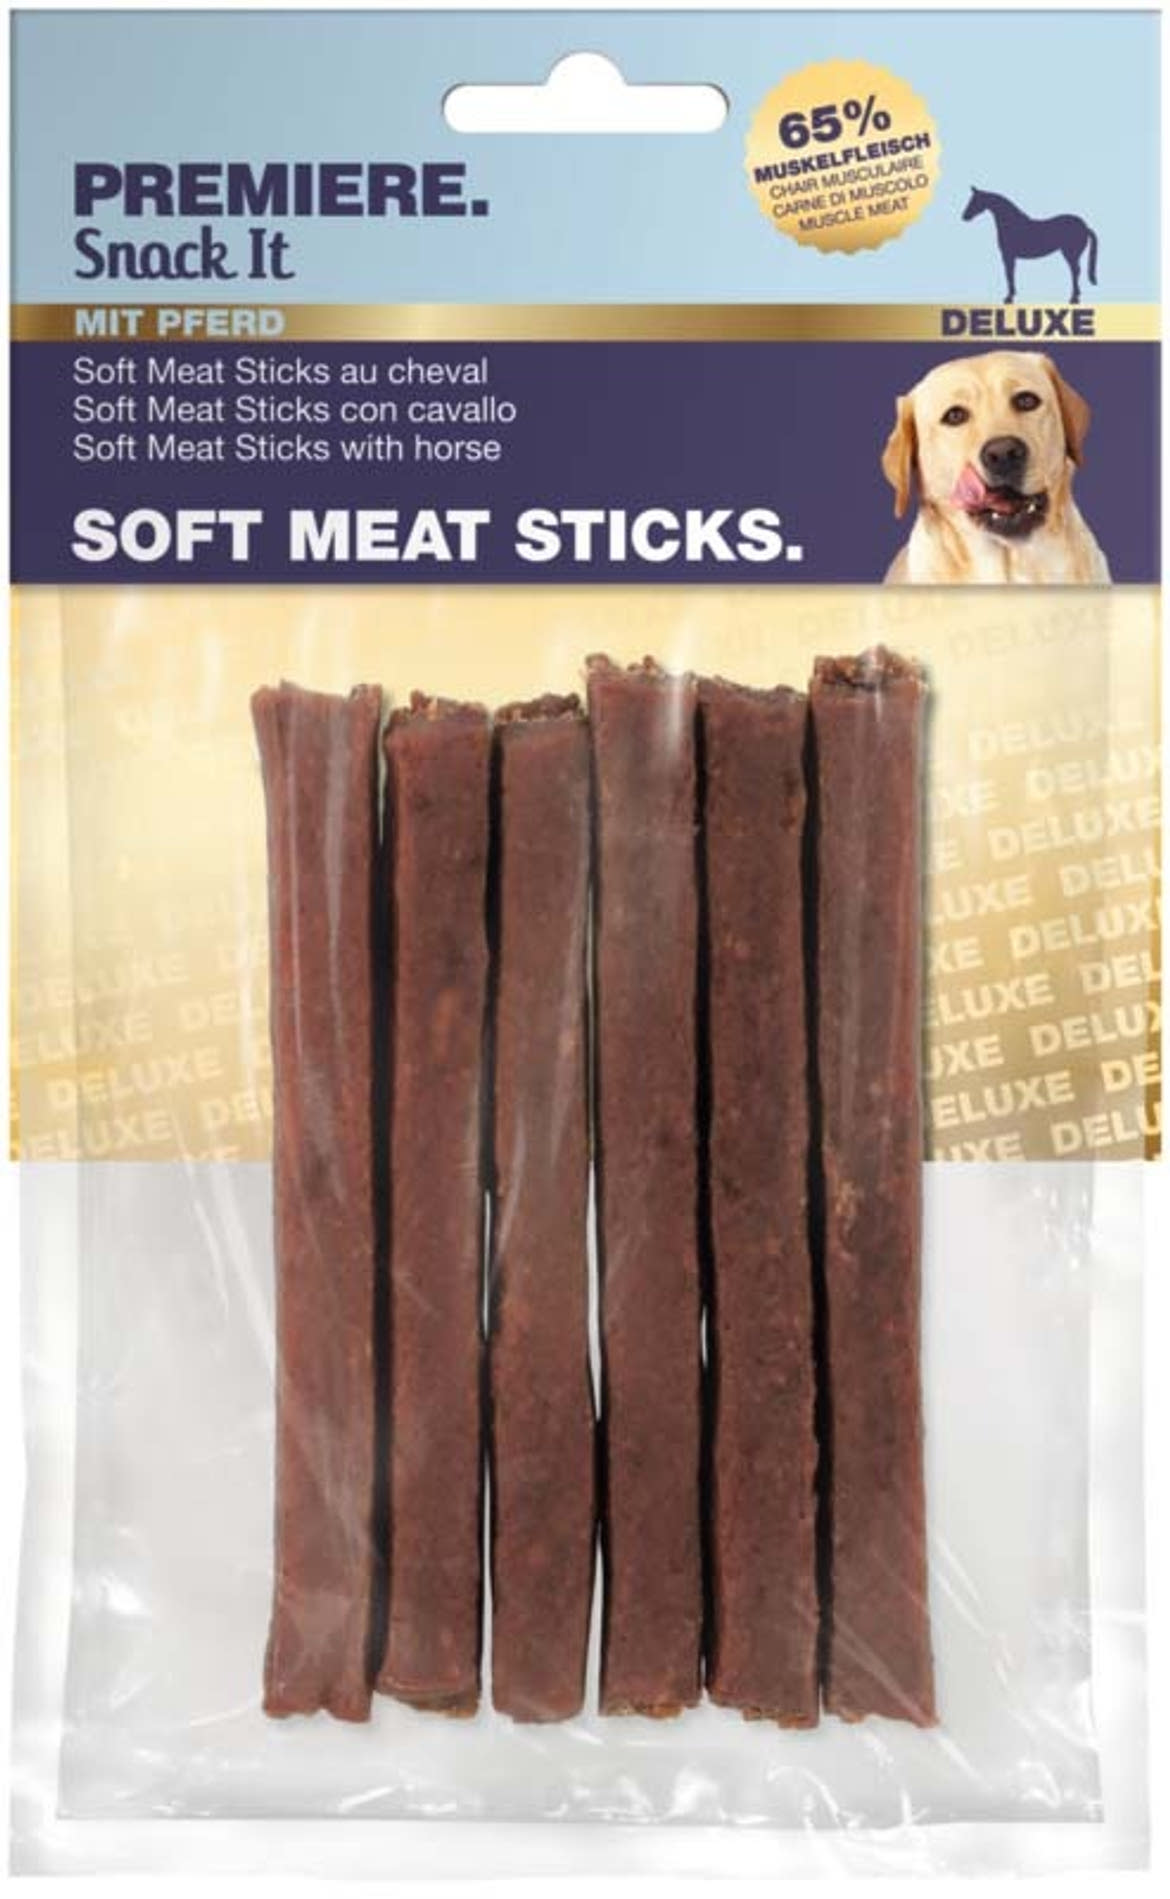 Premiere Snack It soft meat sticks kutya jutalomfalat lÃ³hÃºs